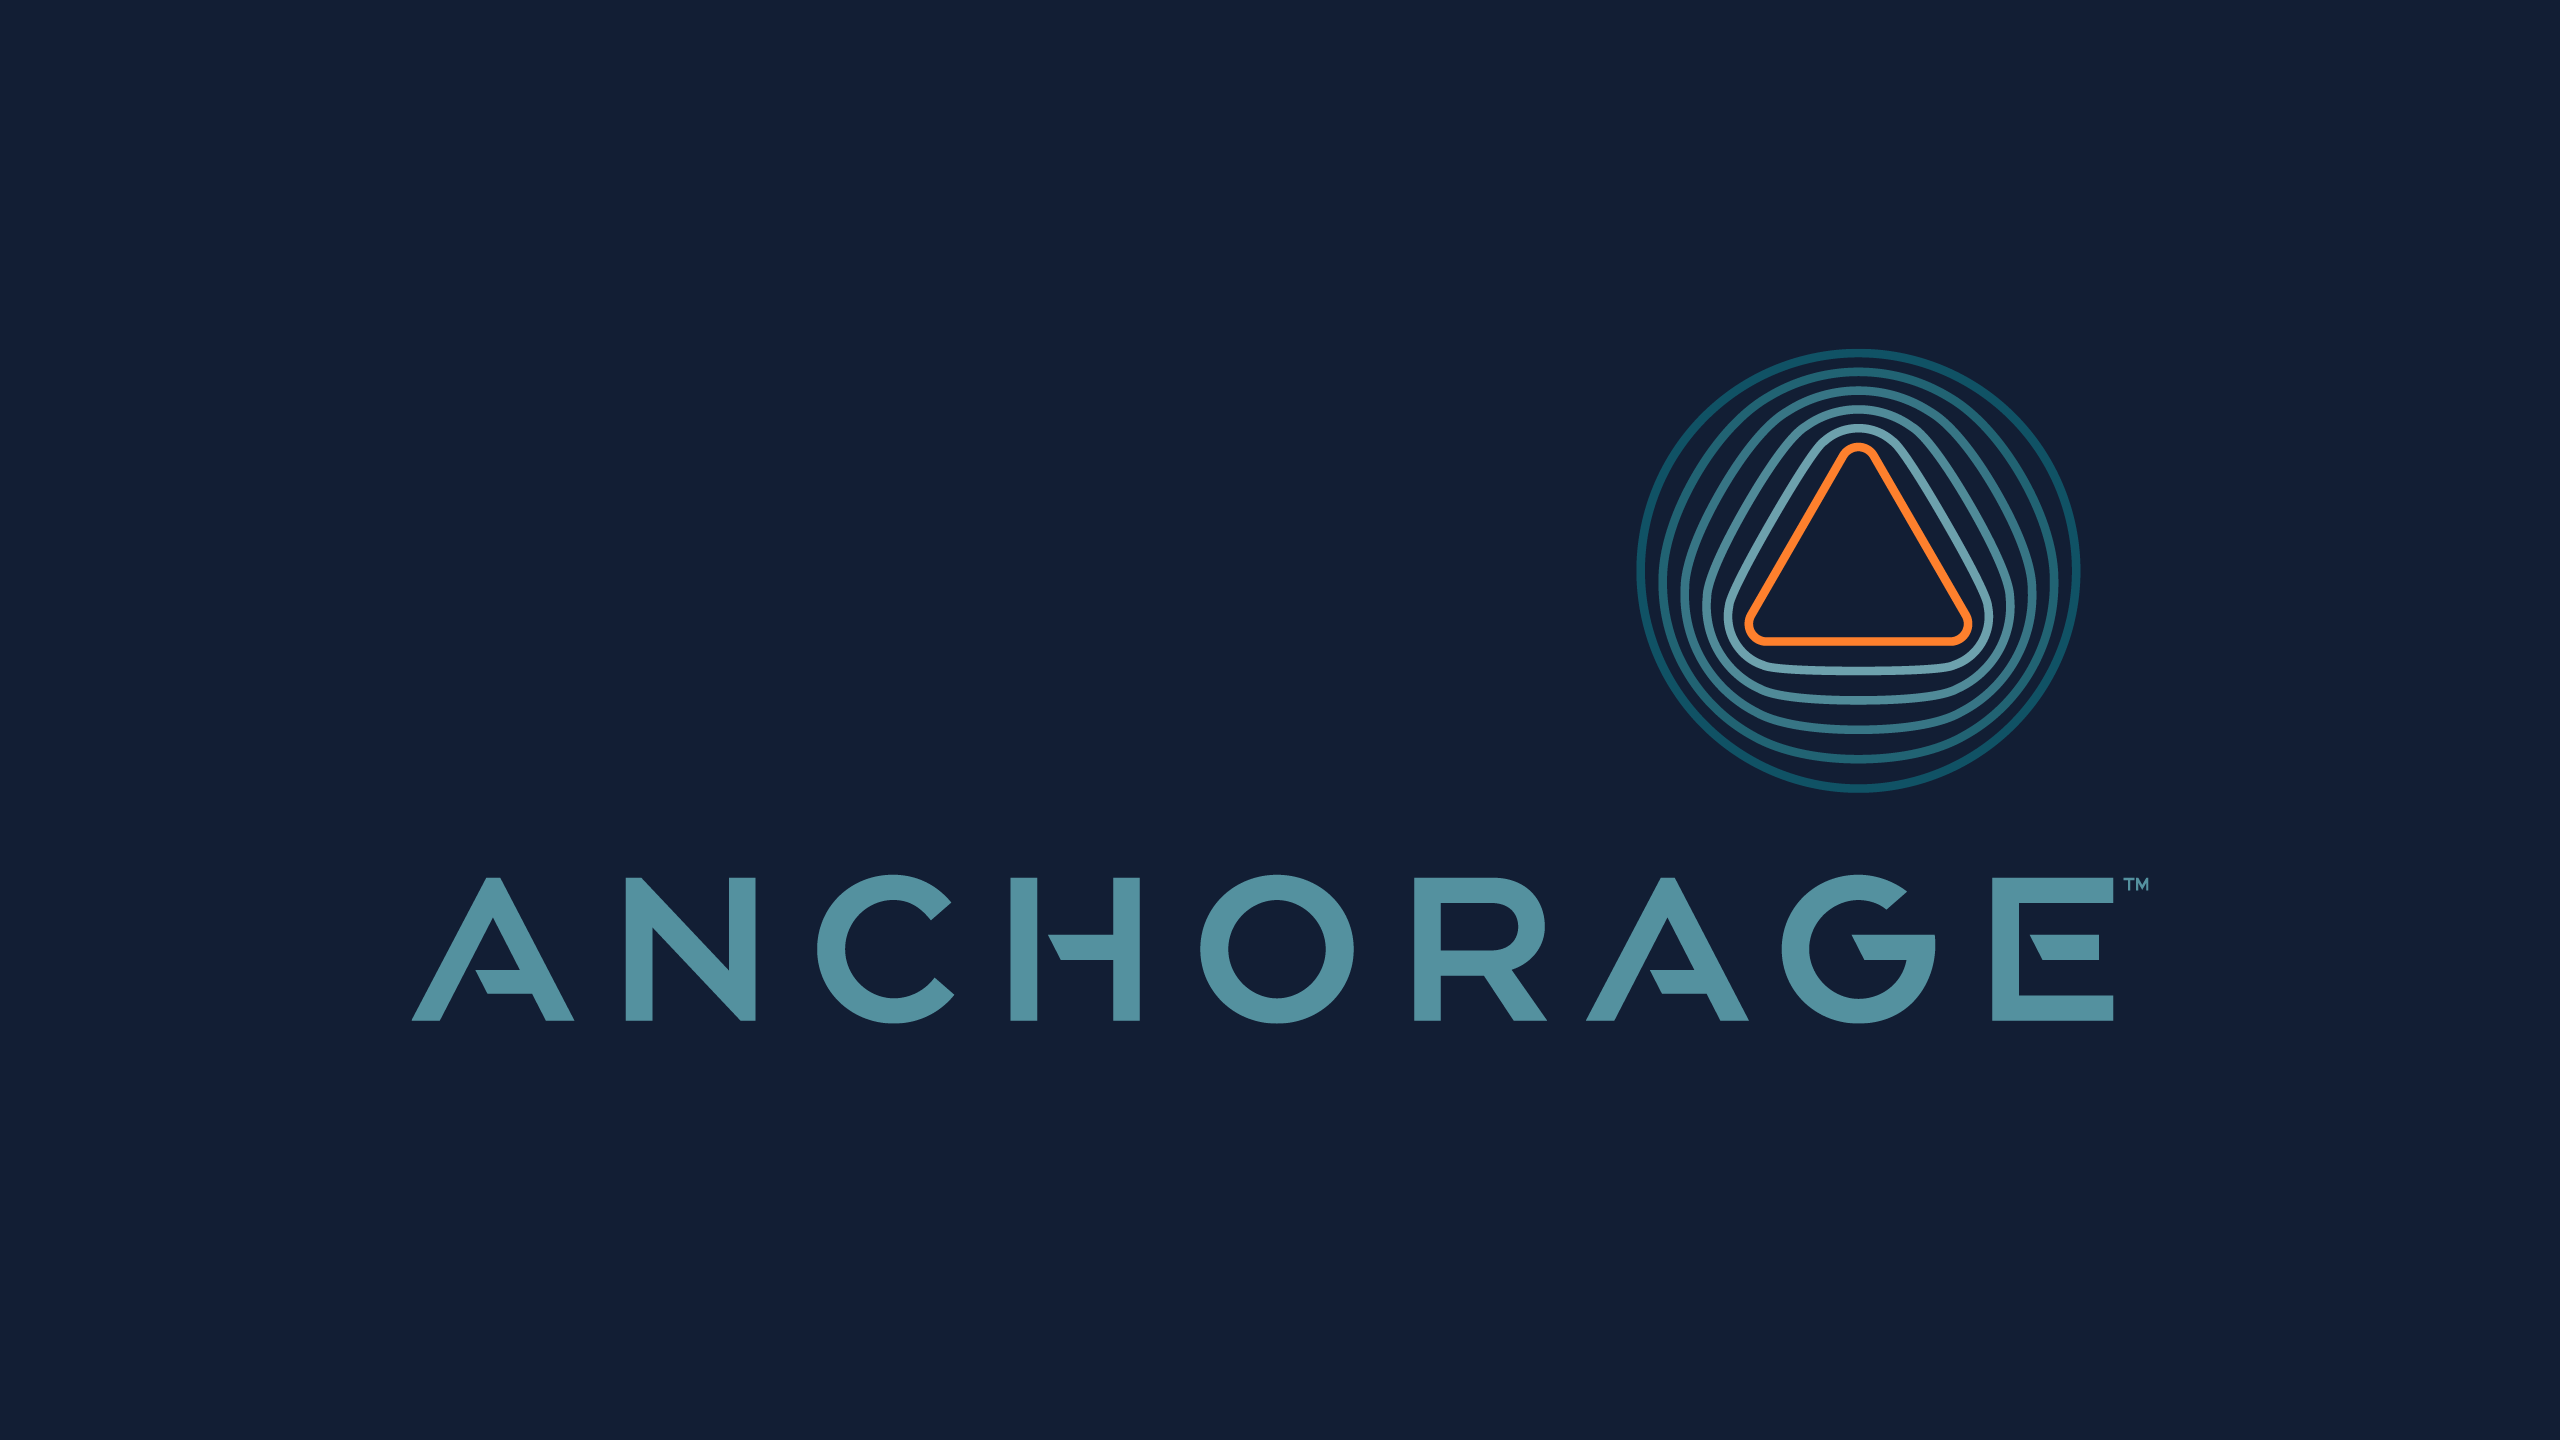 Anchorage logo lockup